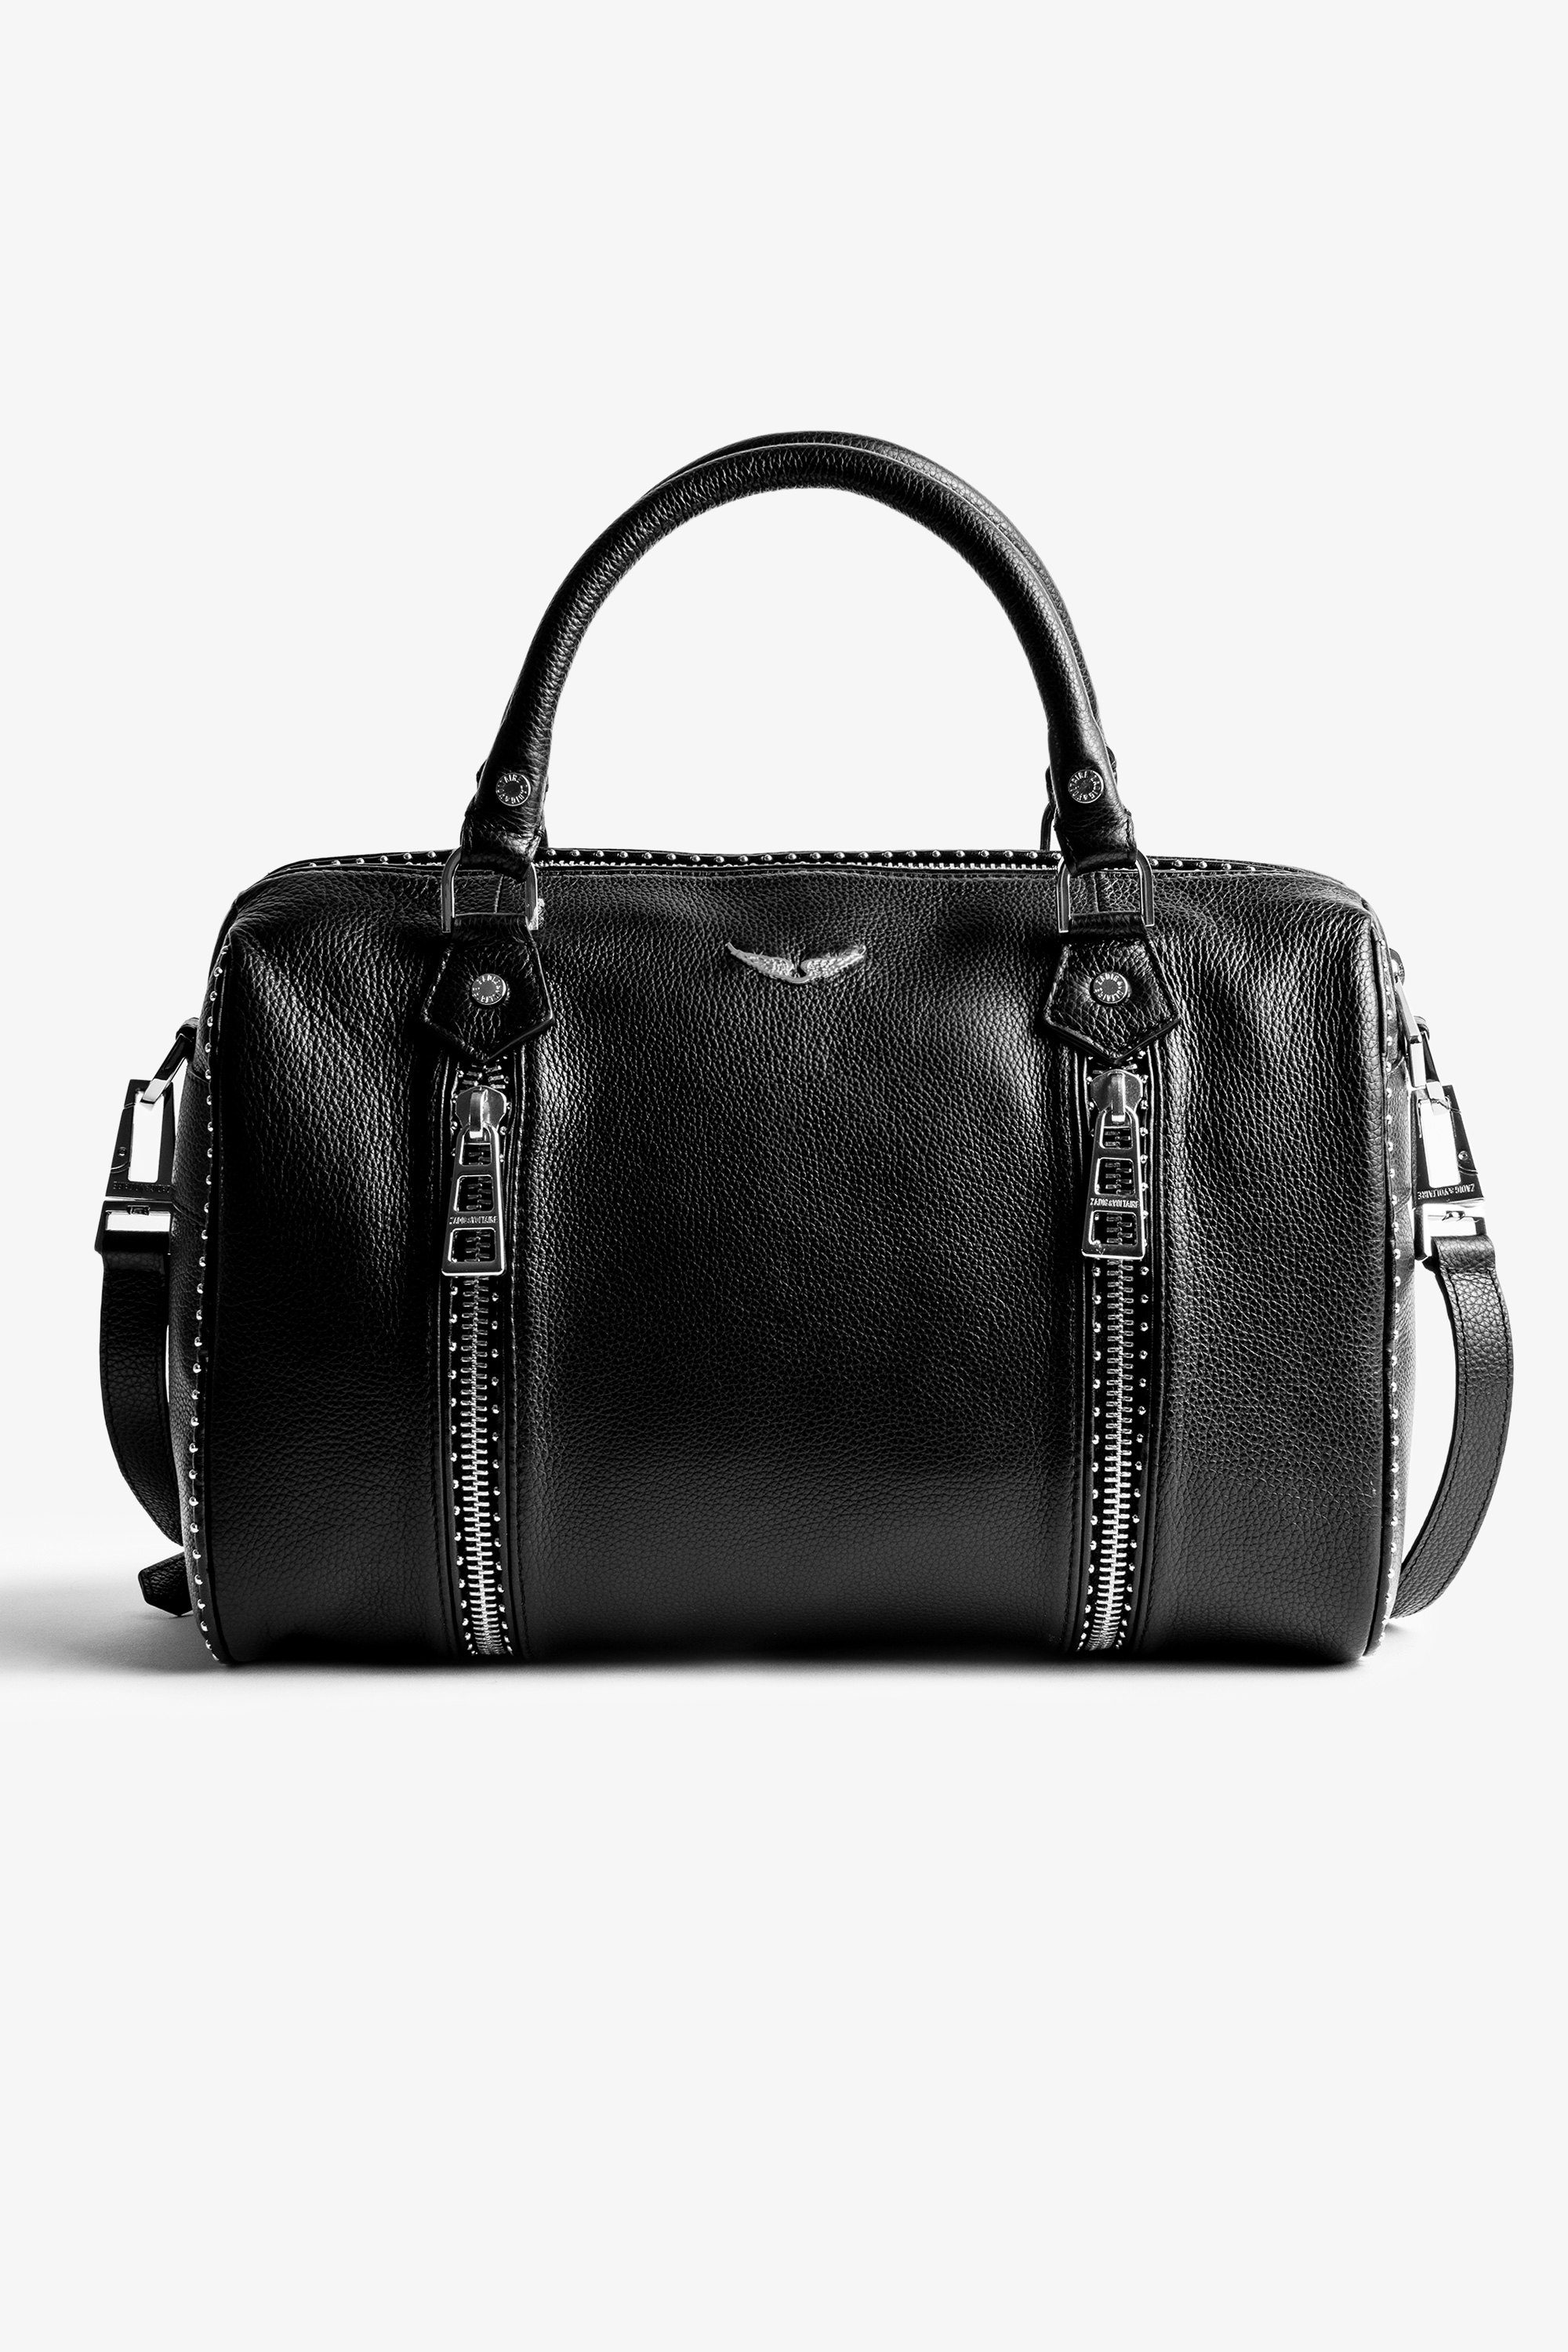 Sunny Medium Studs Bag Women's black bag in grained leather.